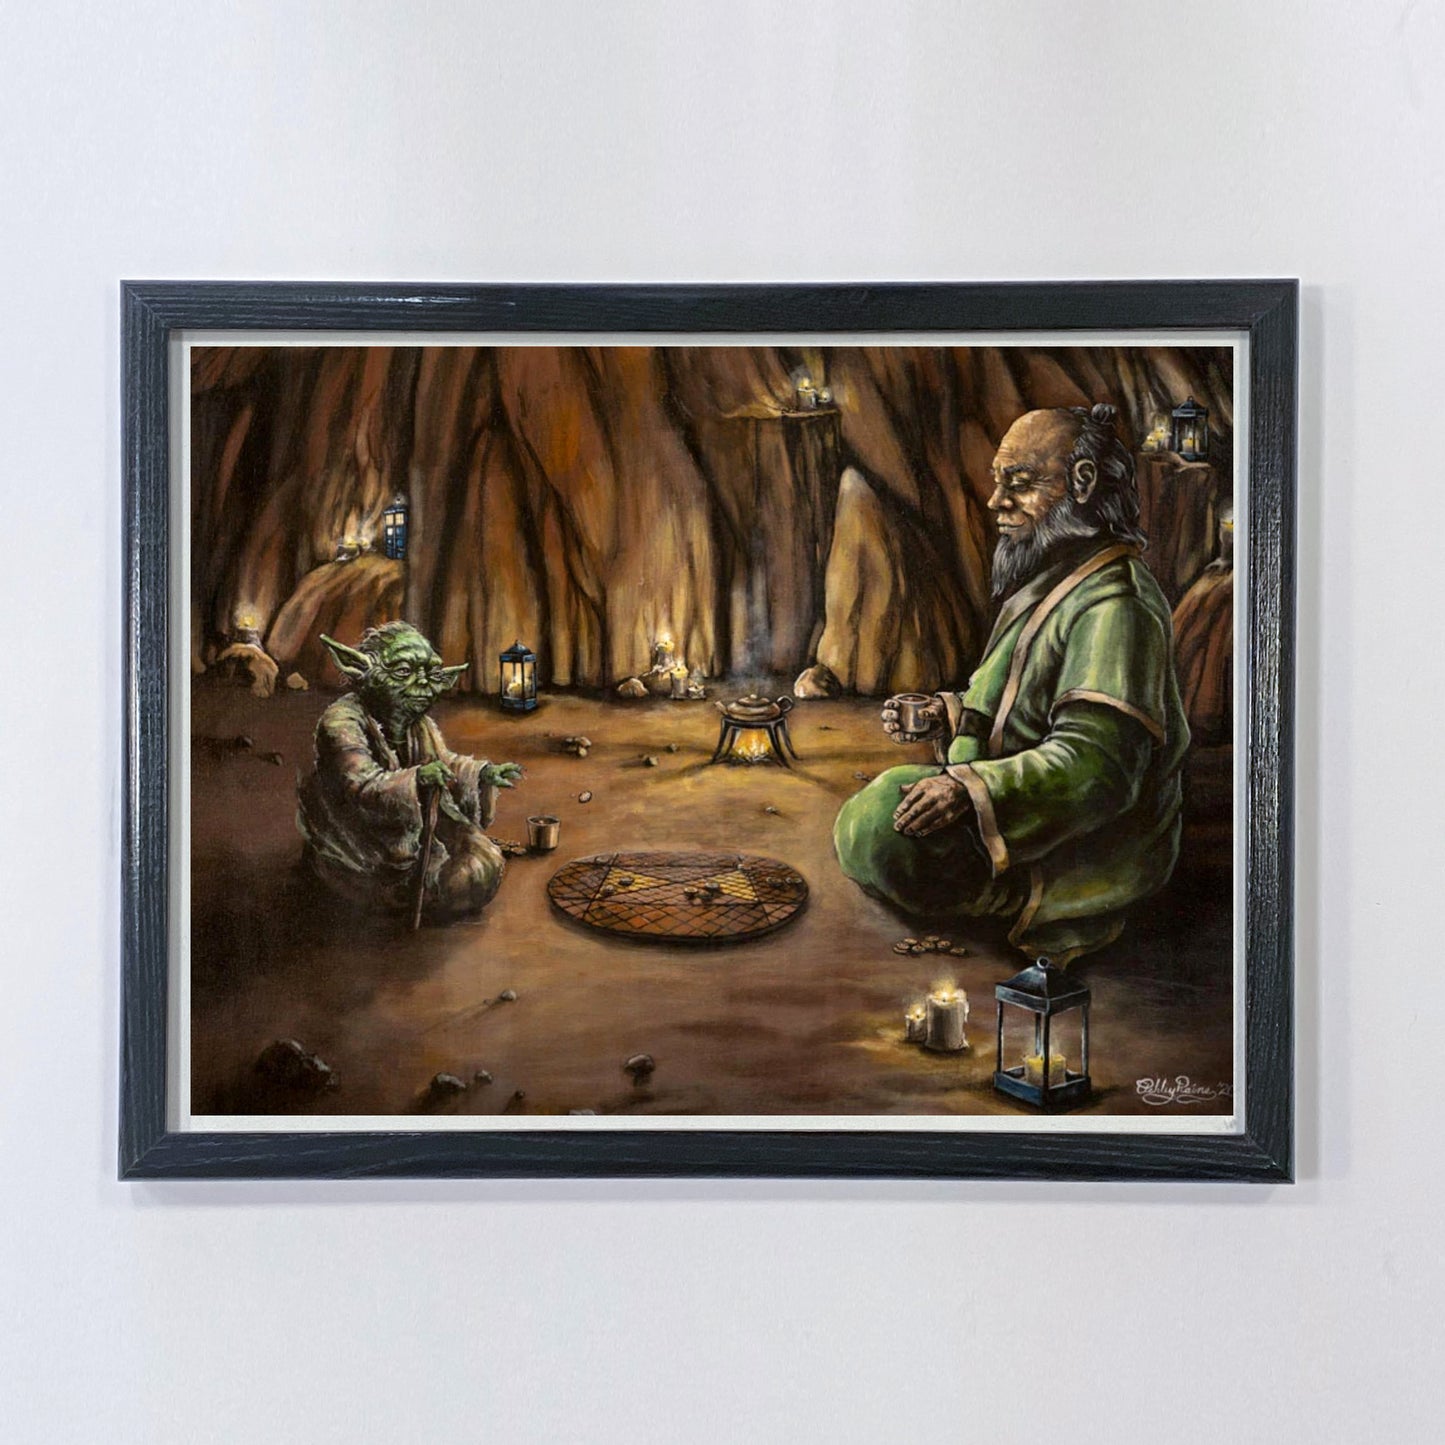 Yoda & Uncle Iroh Share Tea (Star Wars x Avatar: The Last Airbender) Parody Art Print